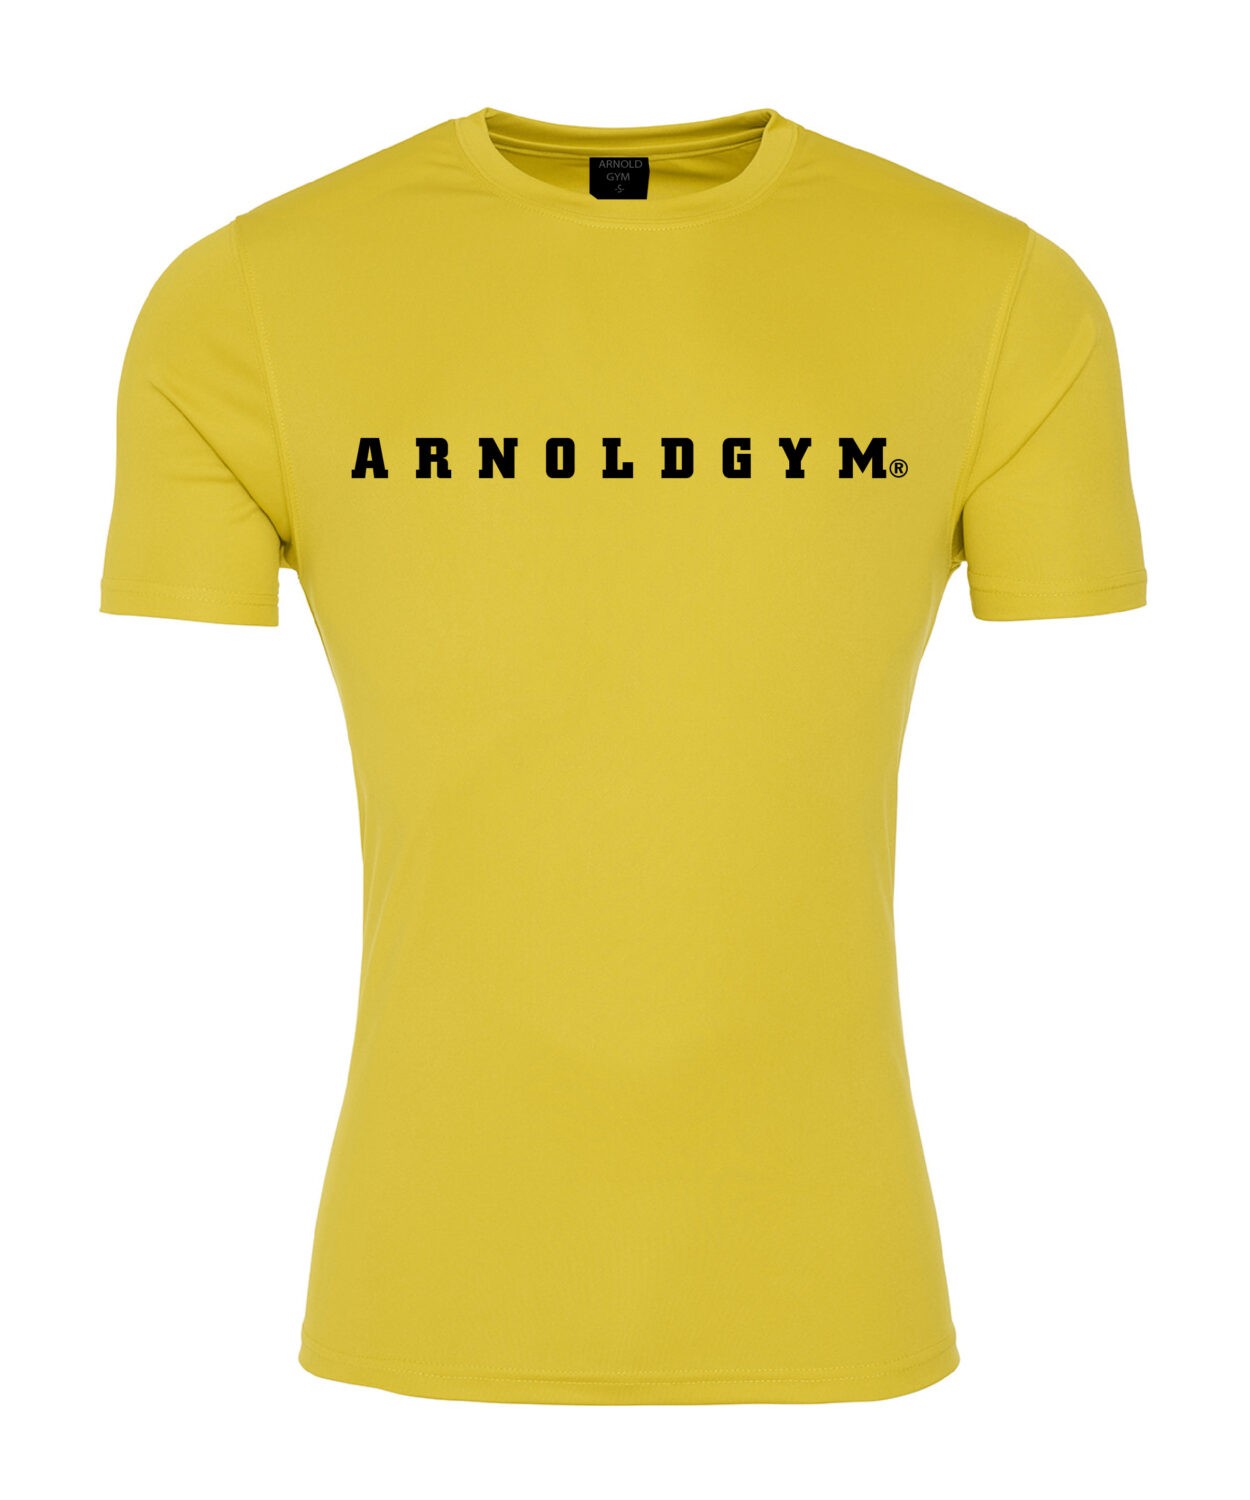 Men's Training T-shirt | Short Sleeve Training Top | Arnold Gym